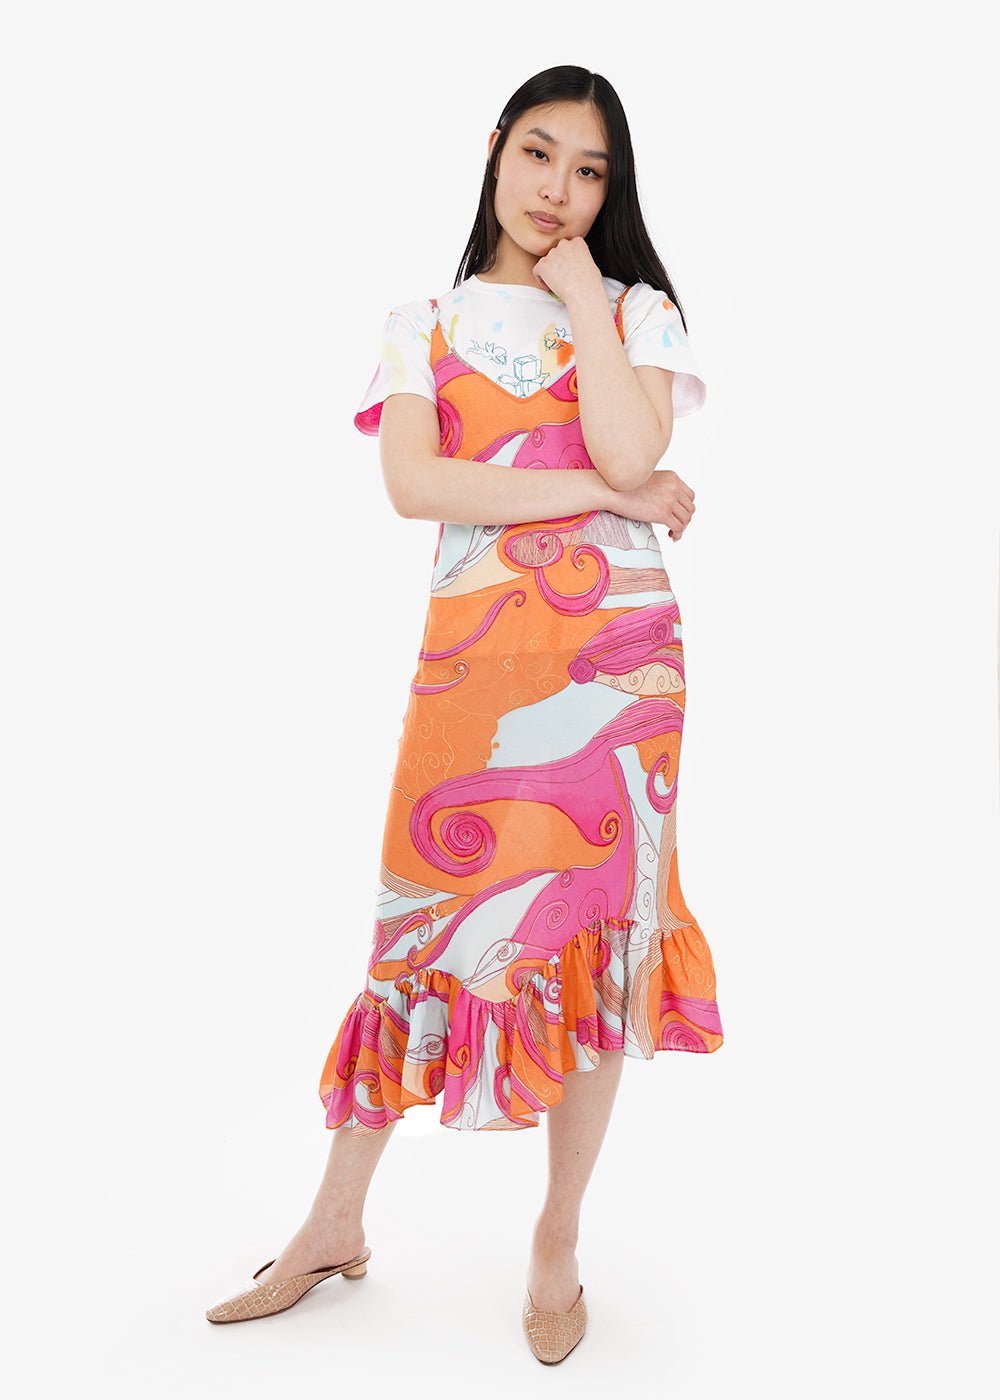 Collina Strada Pink Swirls Michi Dress - New Classics Studios Sustainable Ethical Fashion Canada